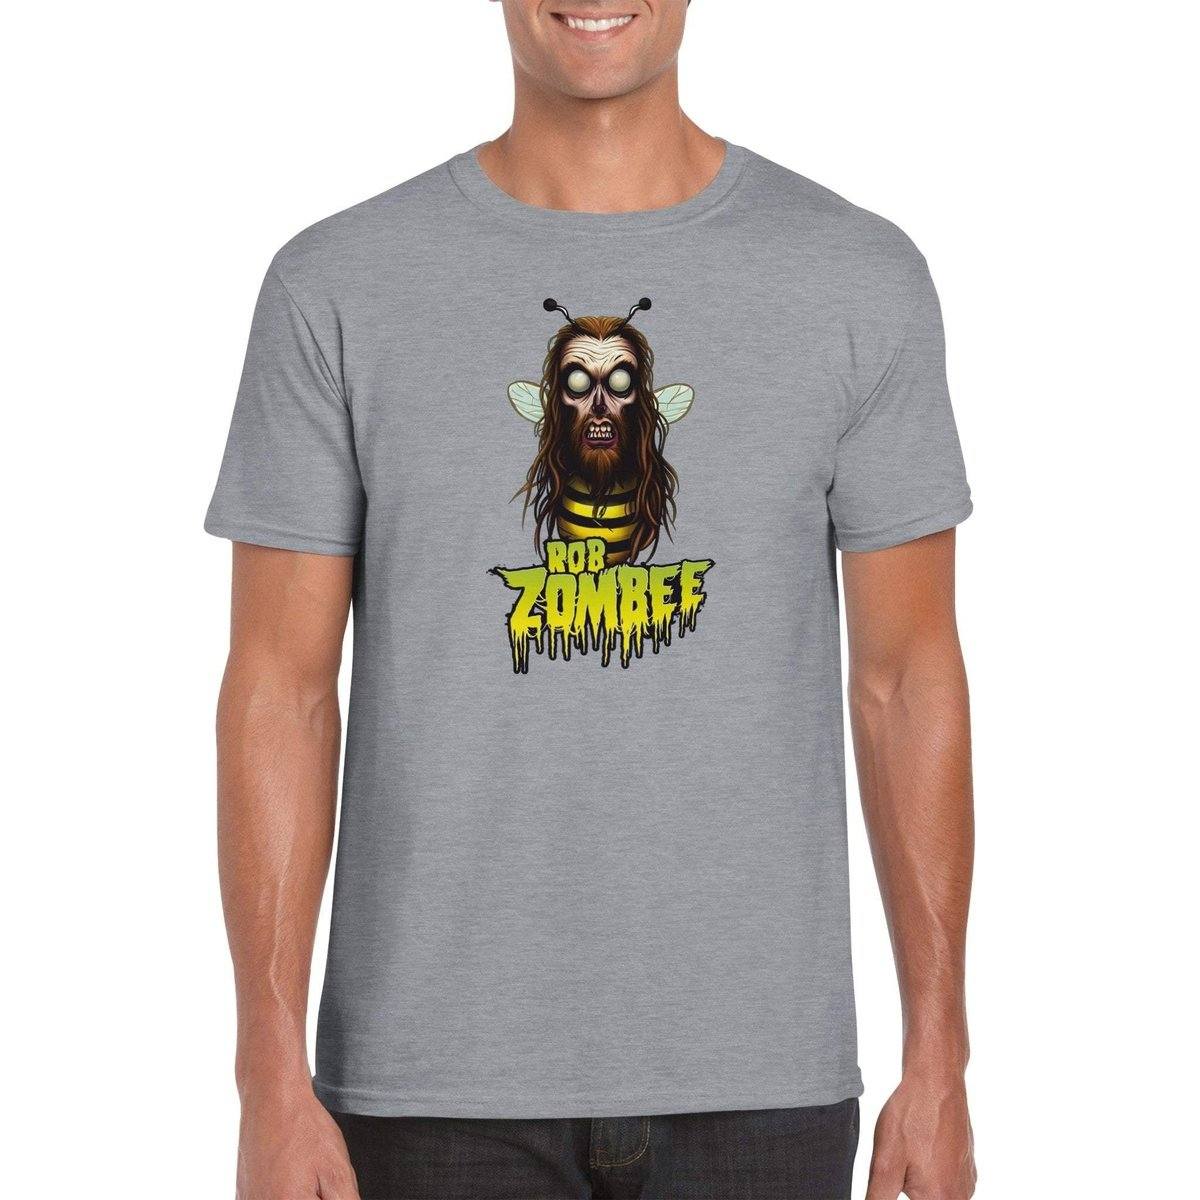 Rob Zombee - Classic Unisex Crewneck T-shirt Australia Online Color